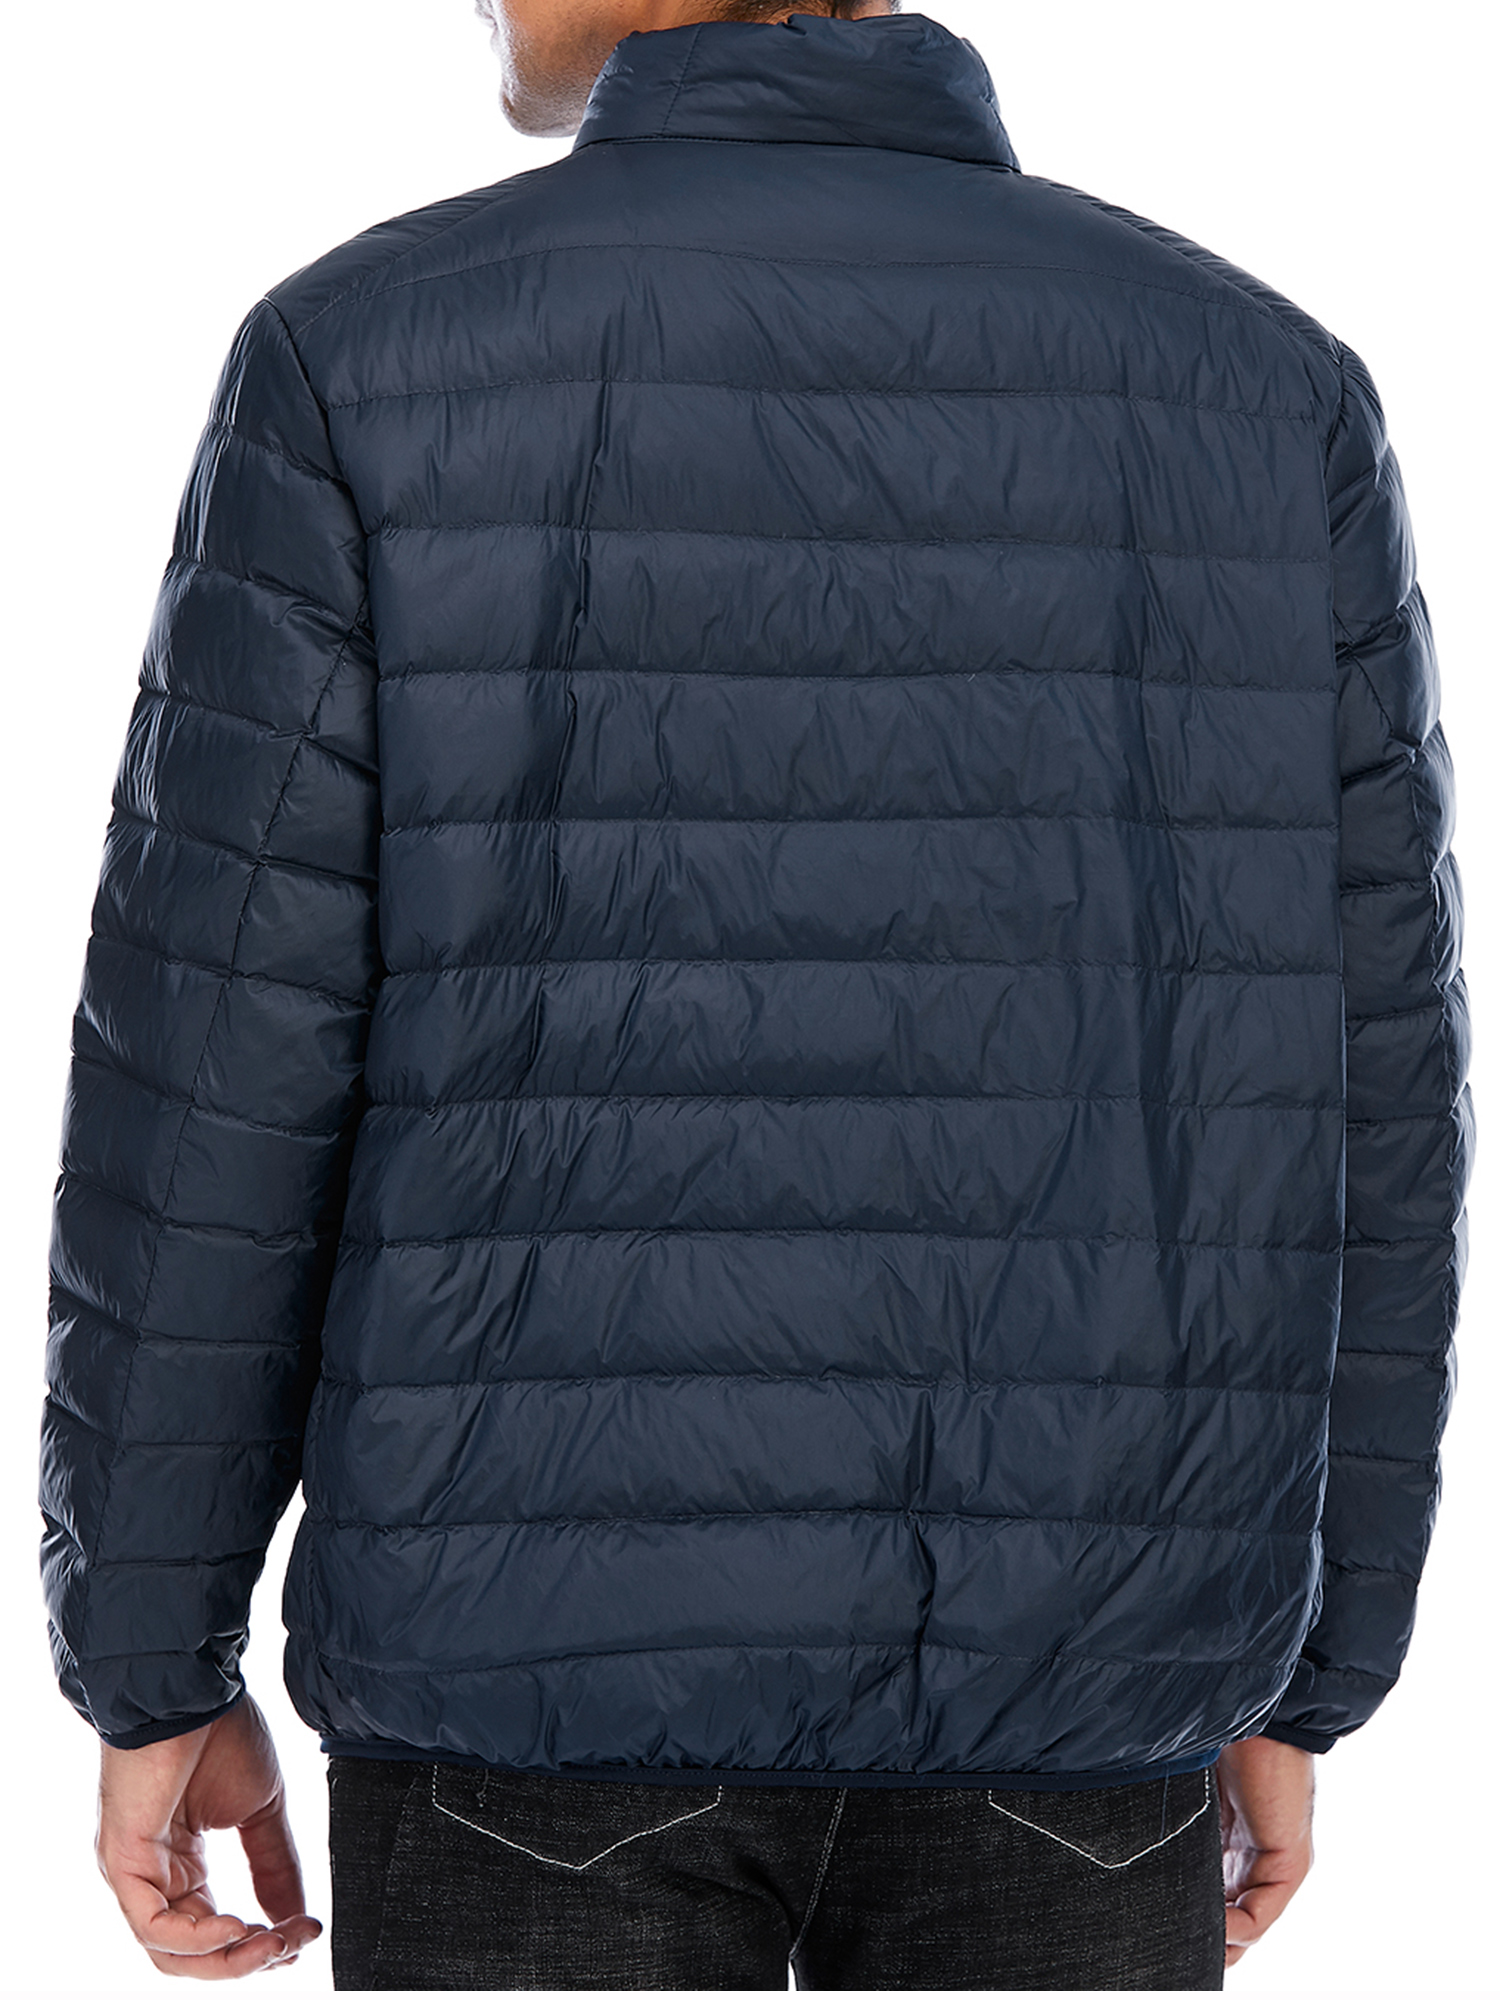 FOCUSSEXY Mens Down Puffer Jacket Lightweight Packable Winter Coat Men's Down Puffer Jacket Warm Casual Outdoor Zipper Jacket Packable Puffer Jacket, Blue - image 2 of 7